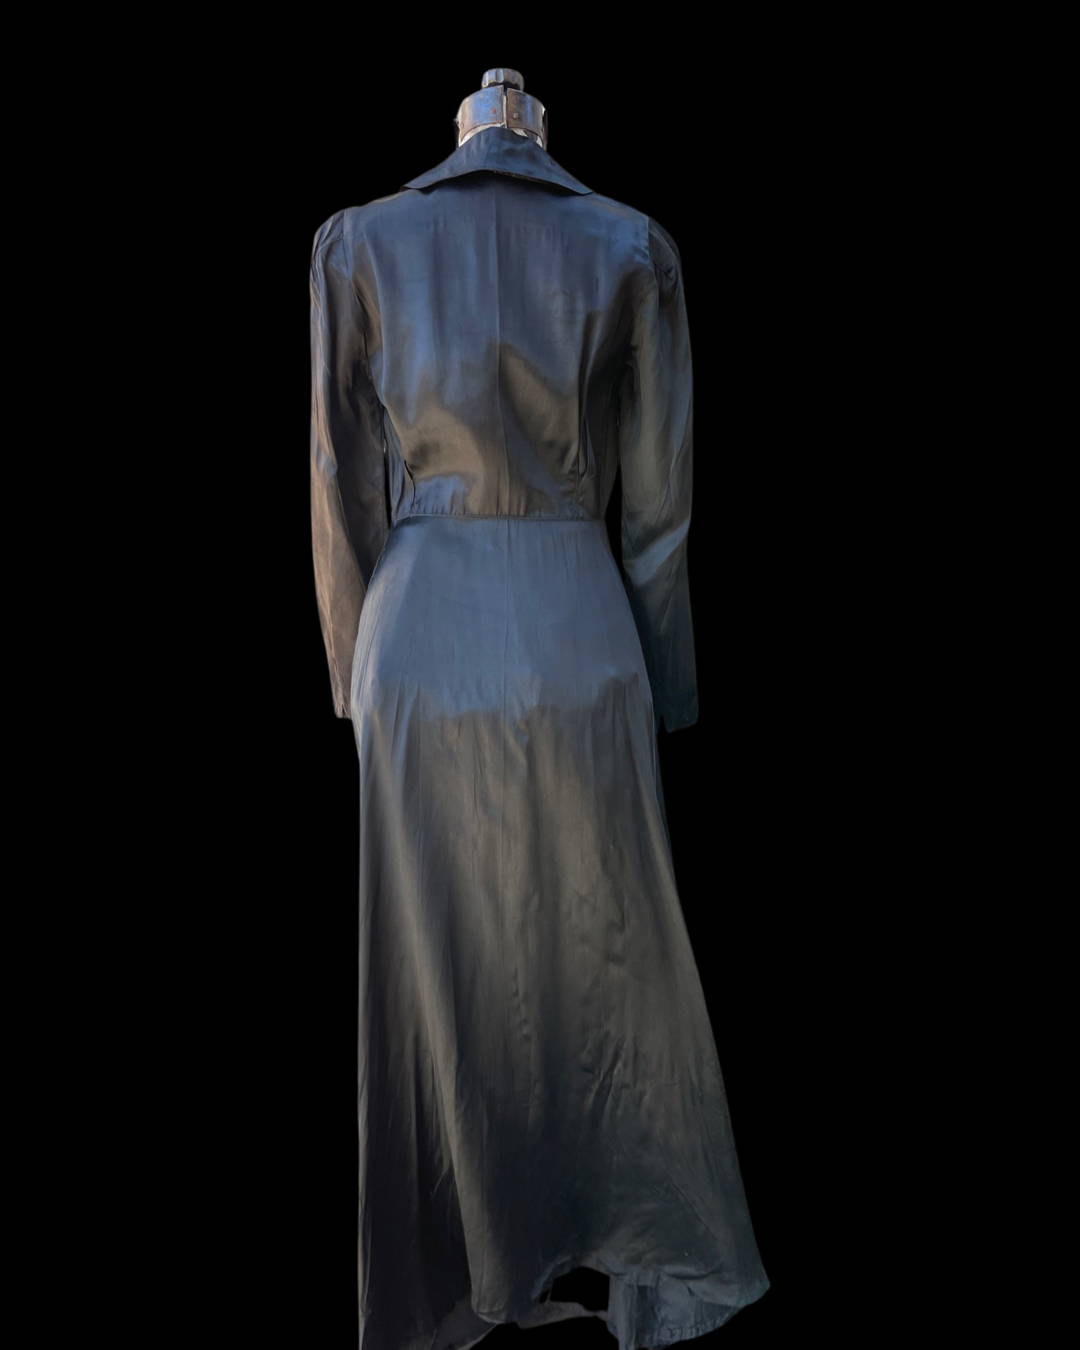 1940s Liquid Satin Hostess Gown